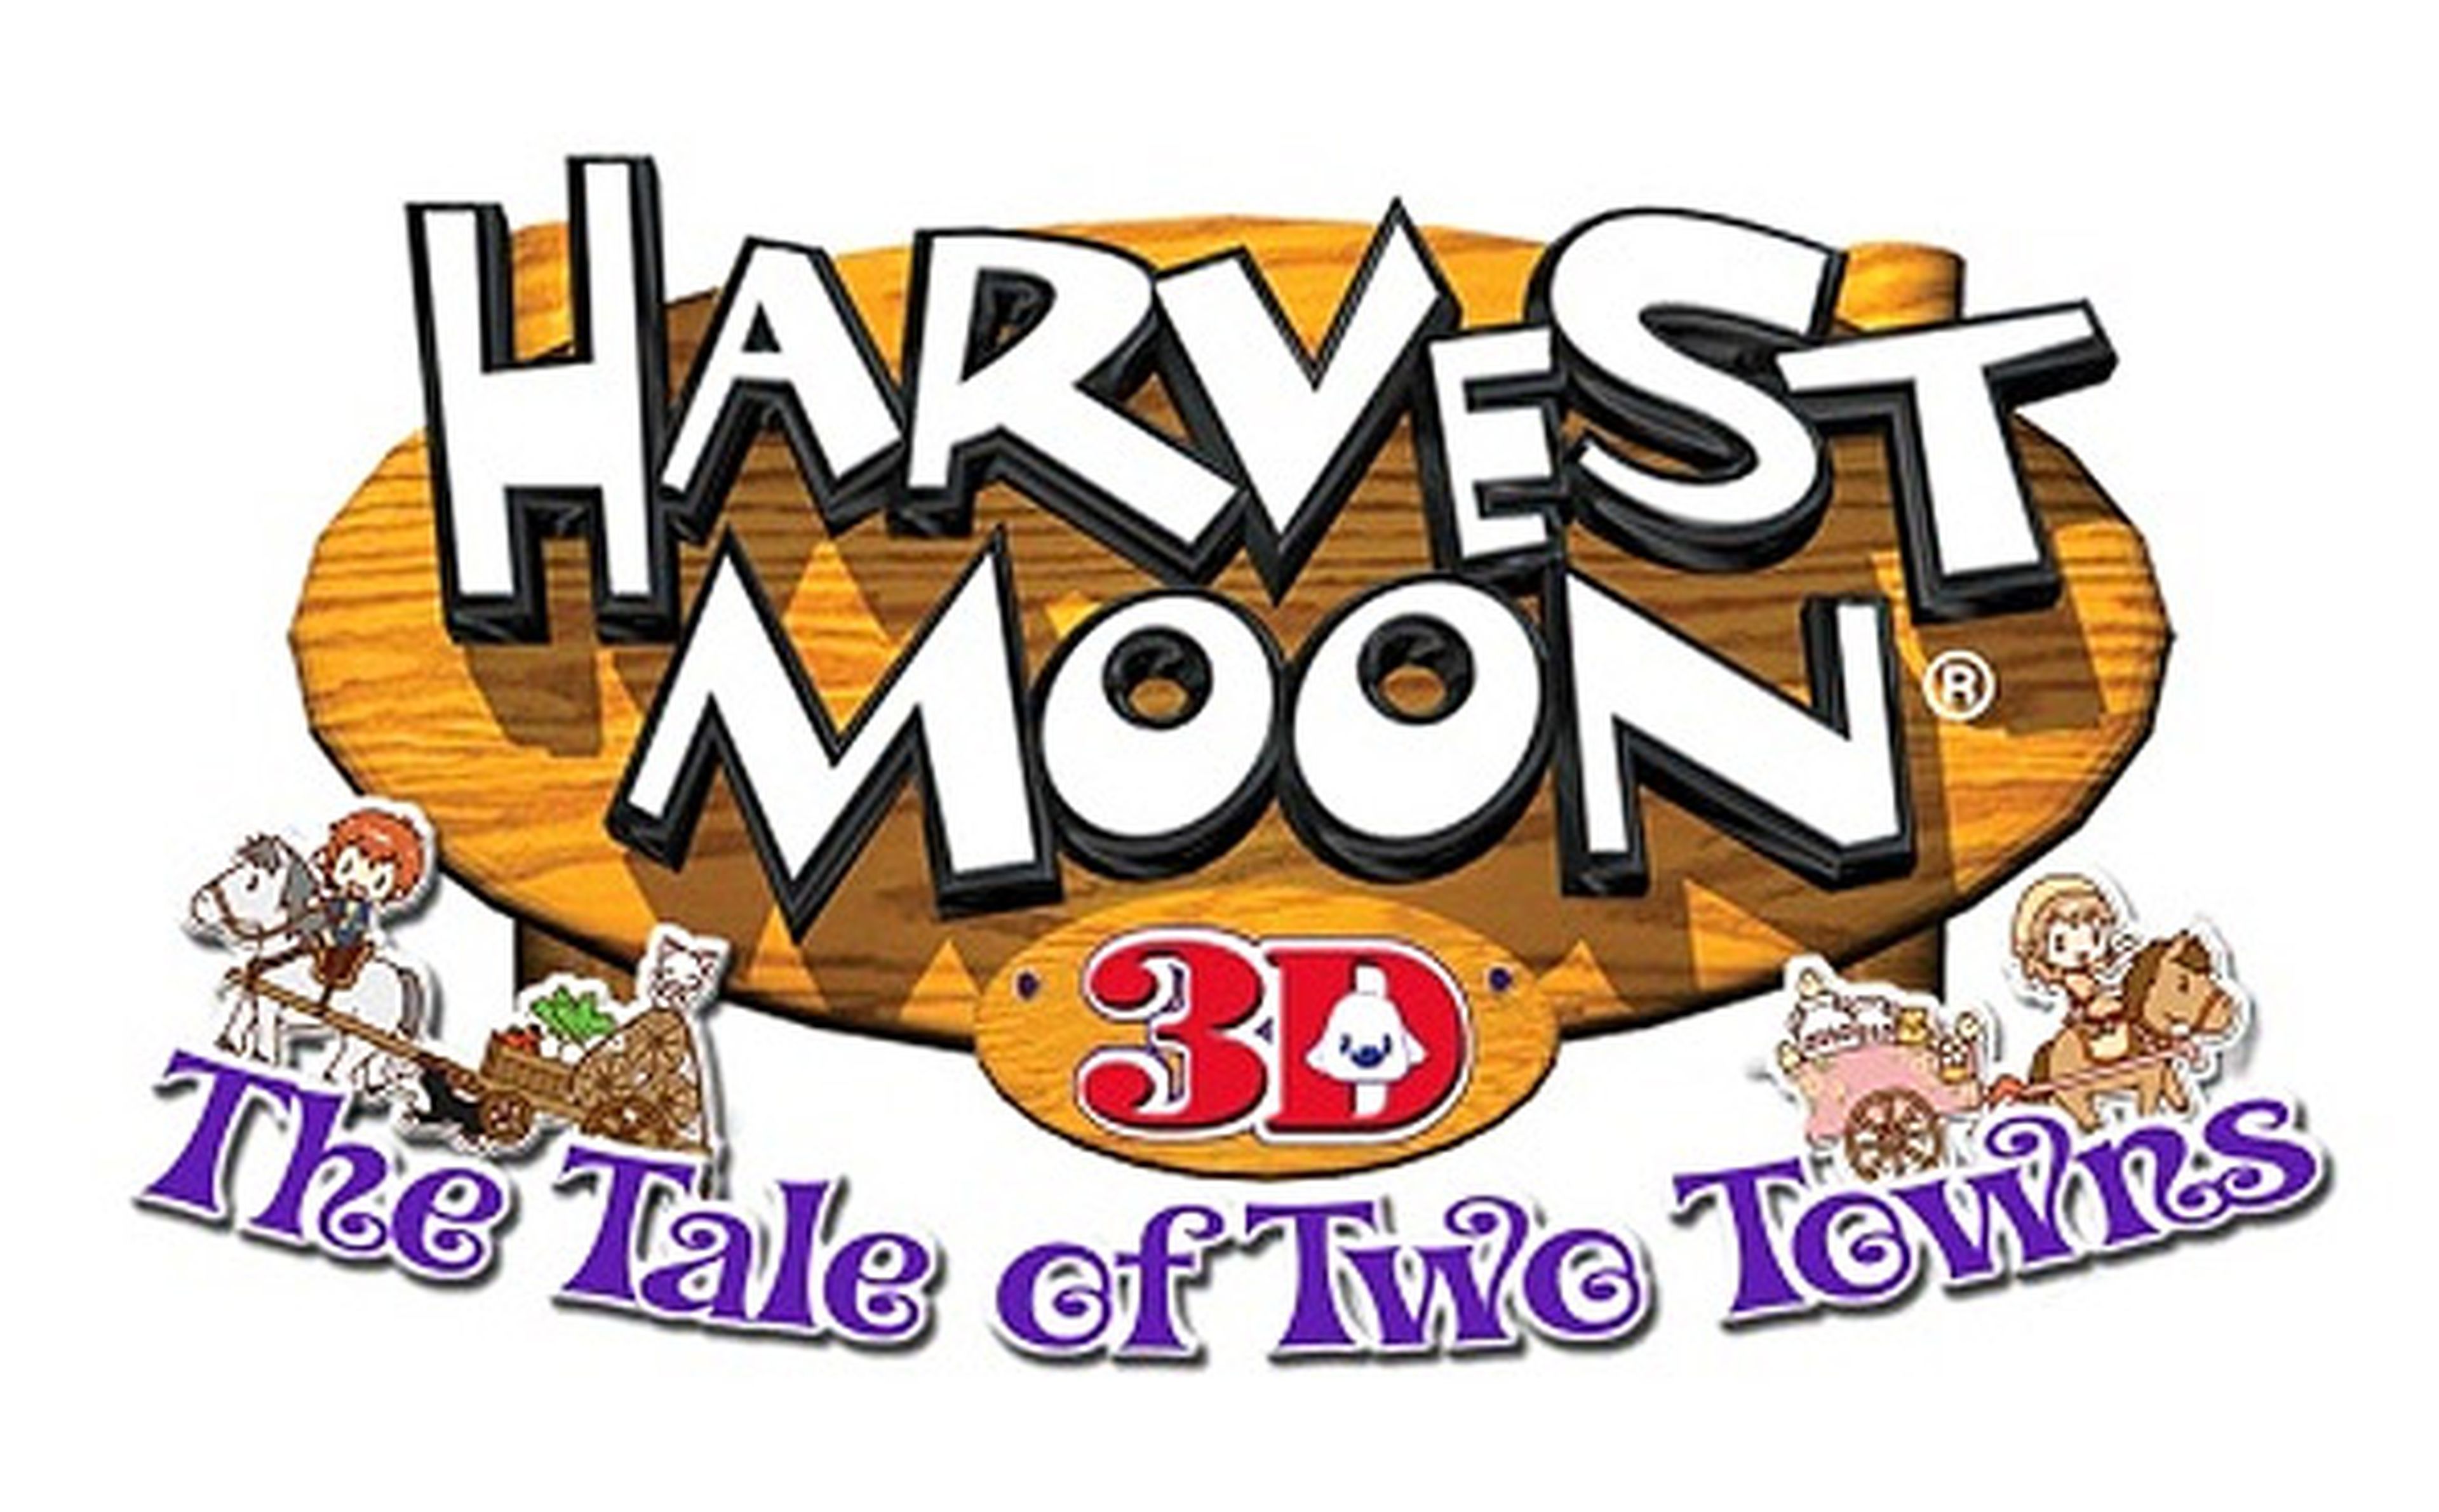 Harvest Moon llegará a Nintendo 3DS